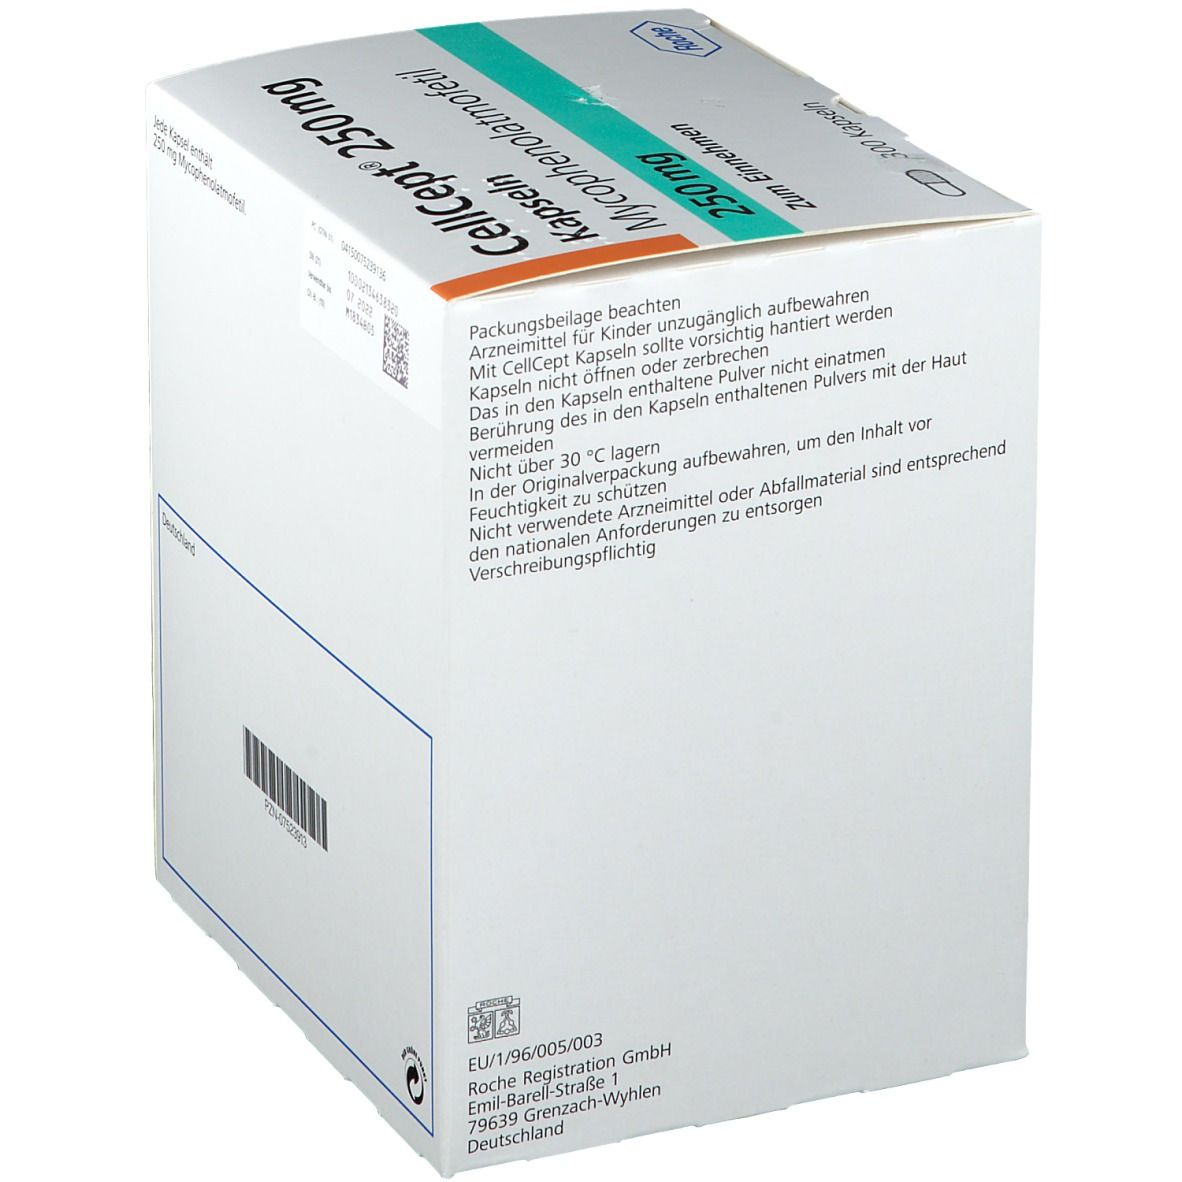 CellCept® 250 mg